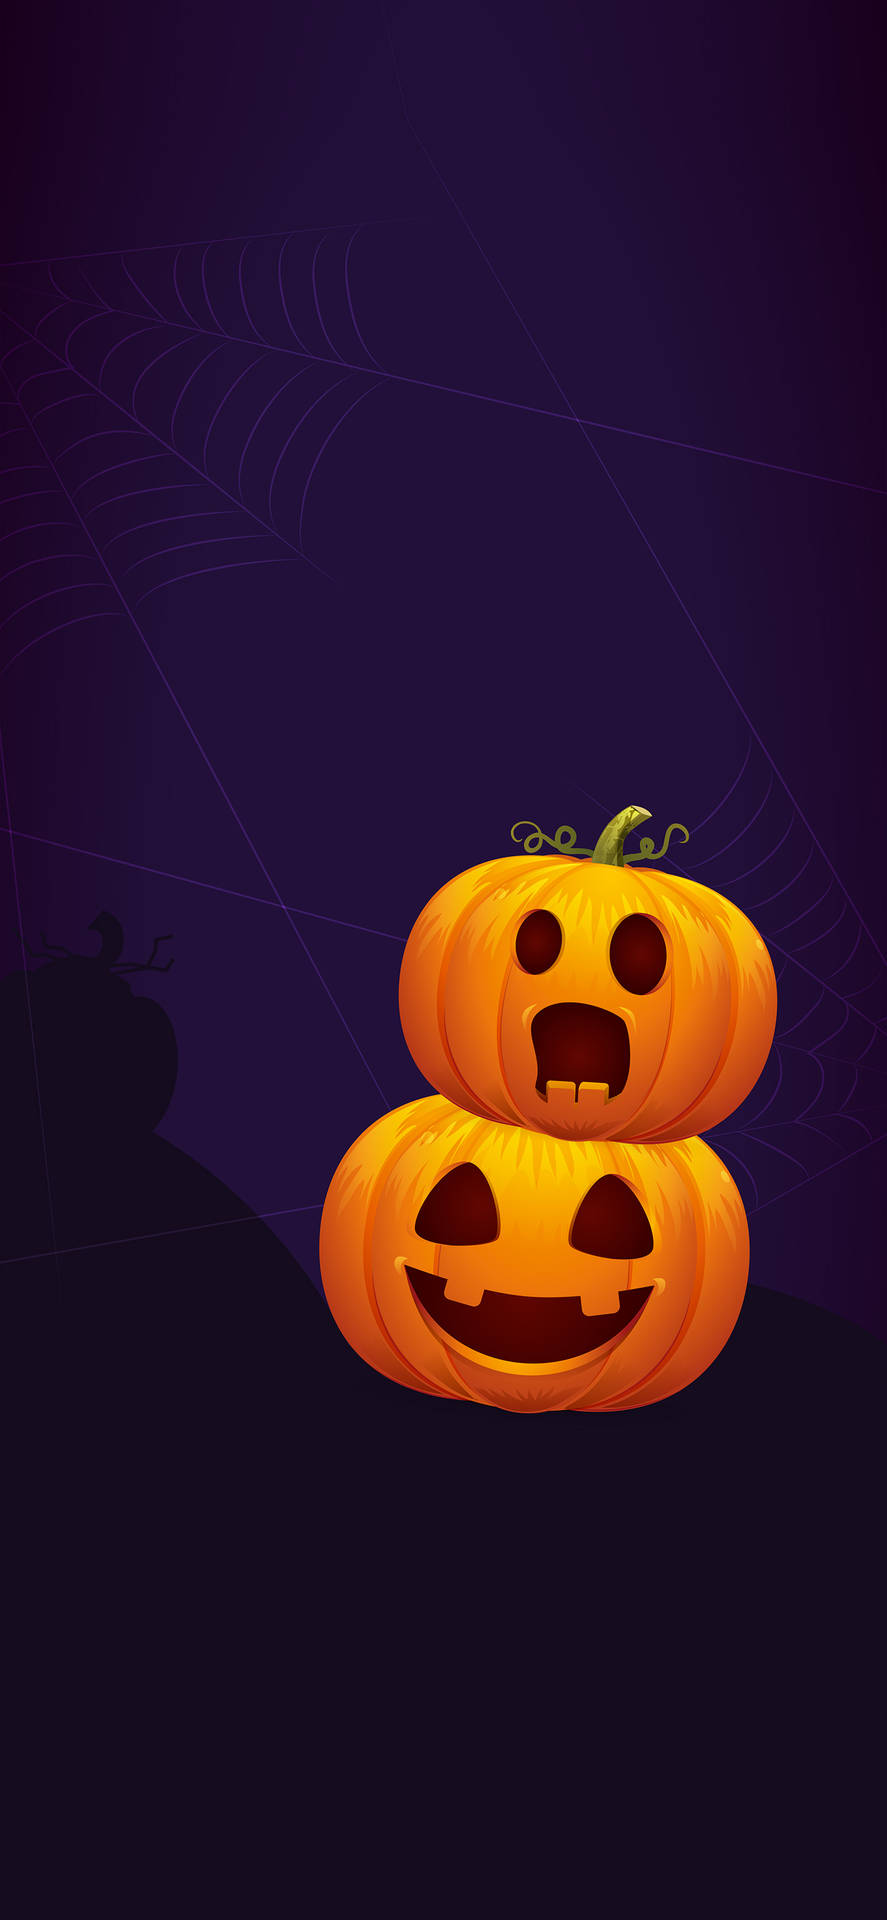 Shocked And Happy Pumpkin Halloween Iphone